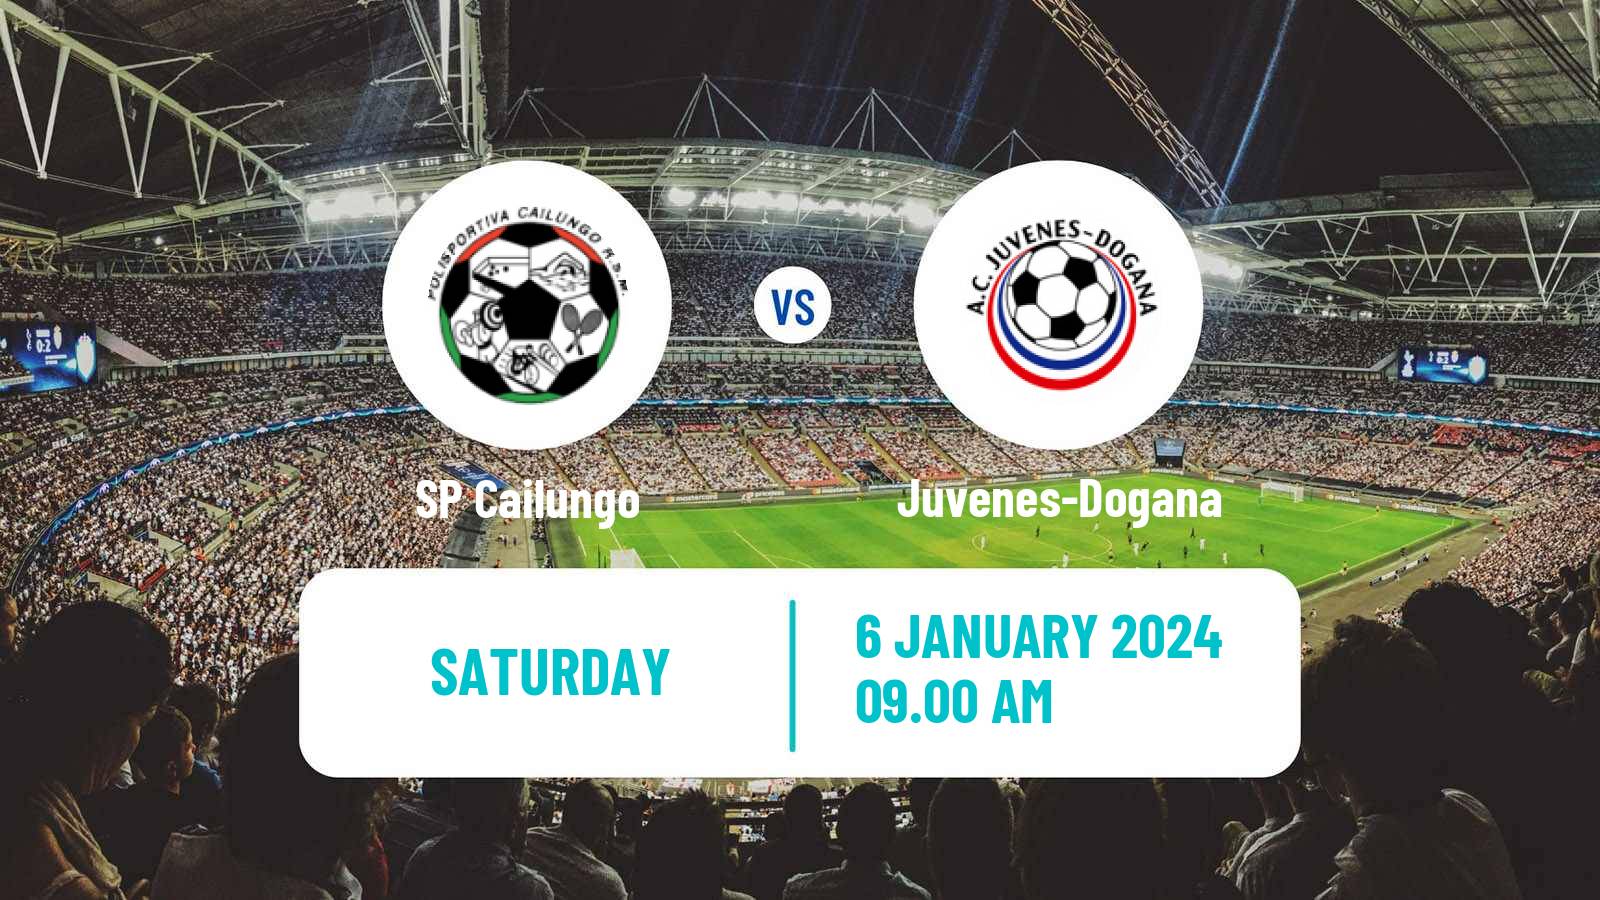 Soccer San Marino Campionato Sammarinese Cailungo - Juvenes-Dogana